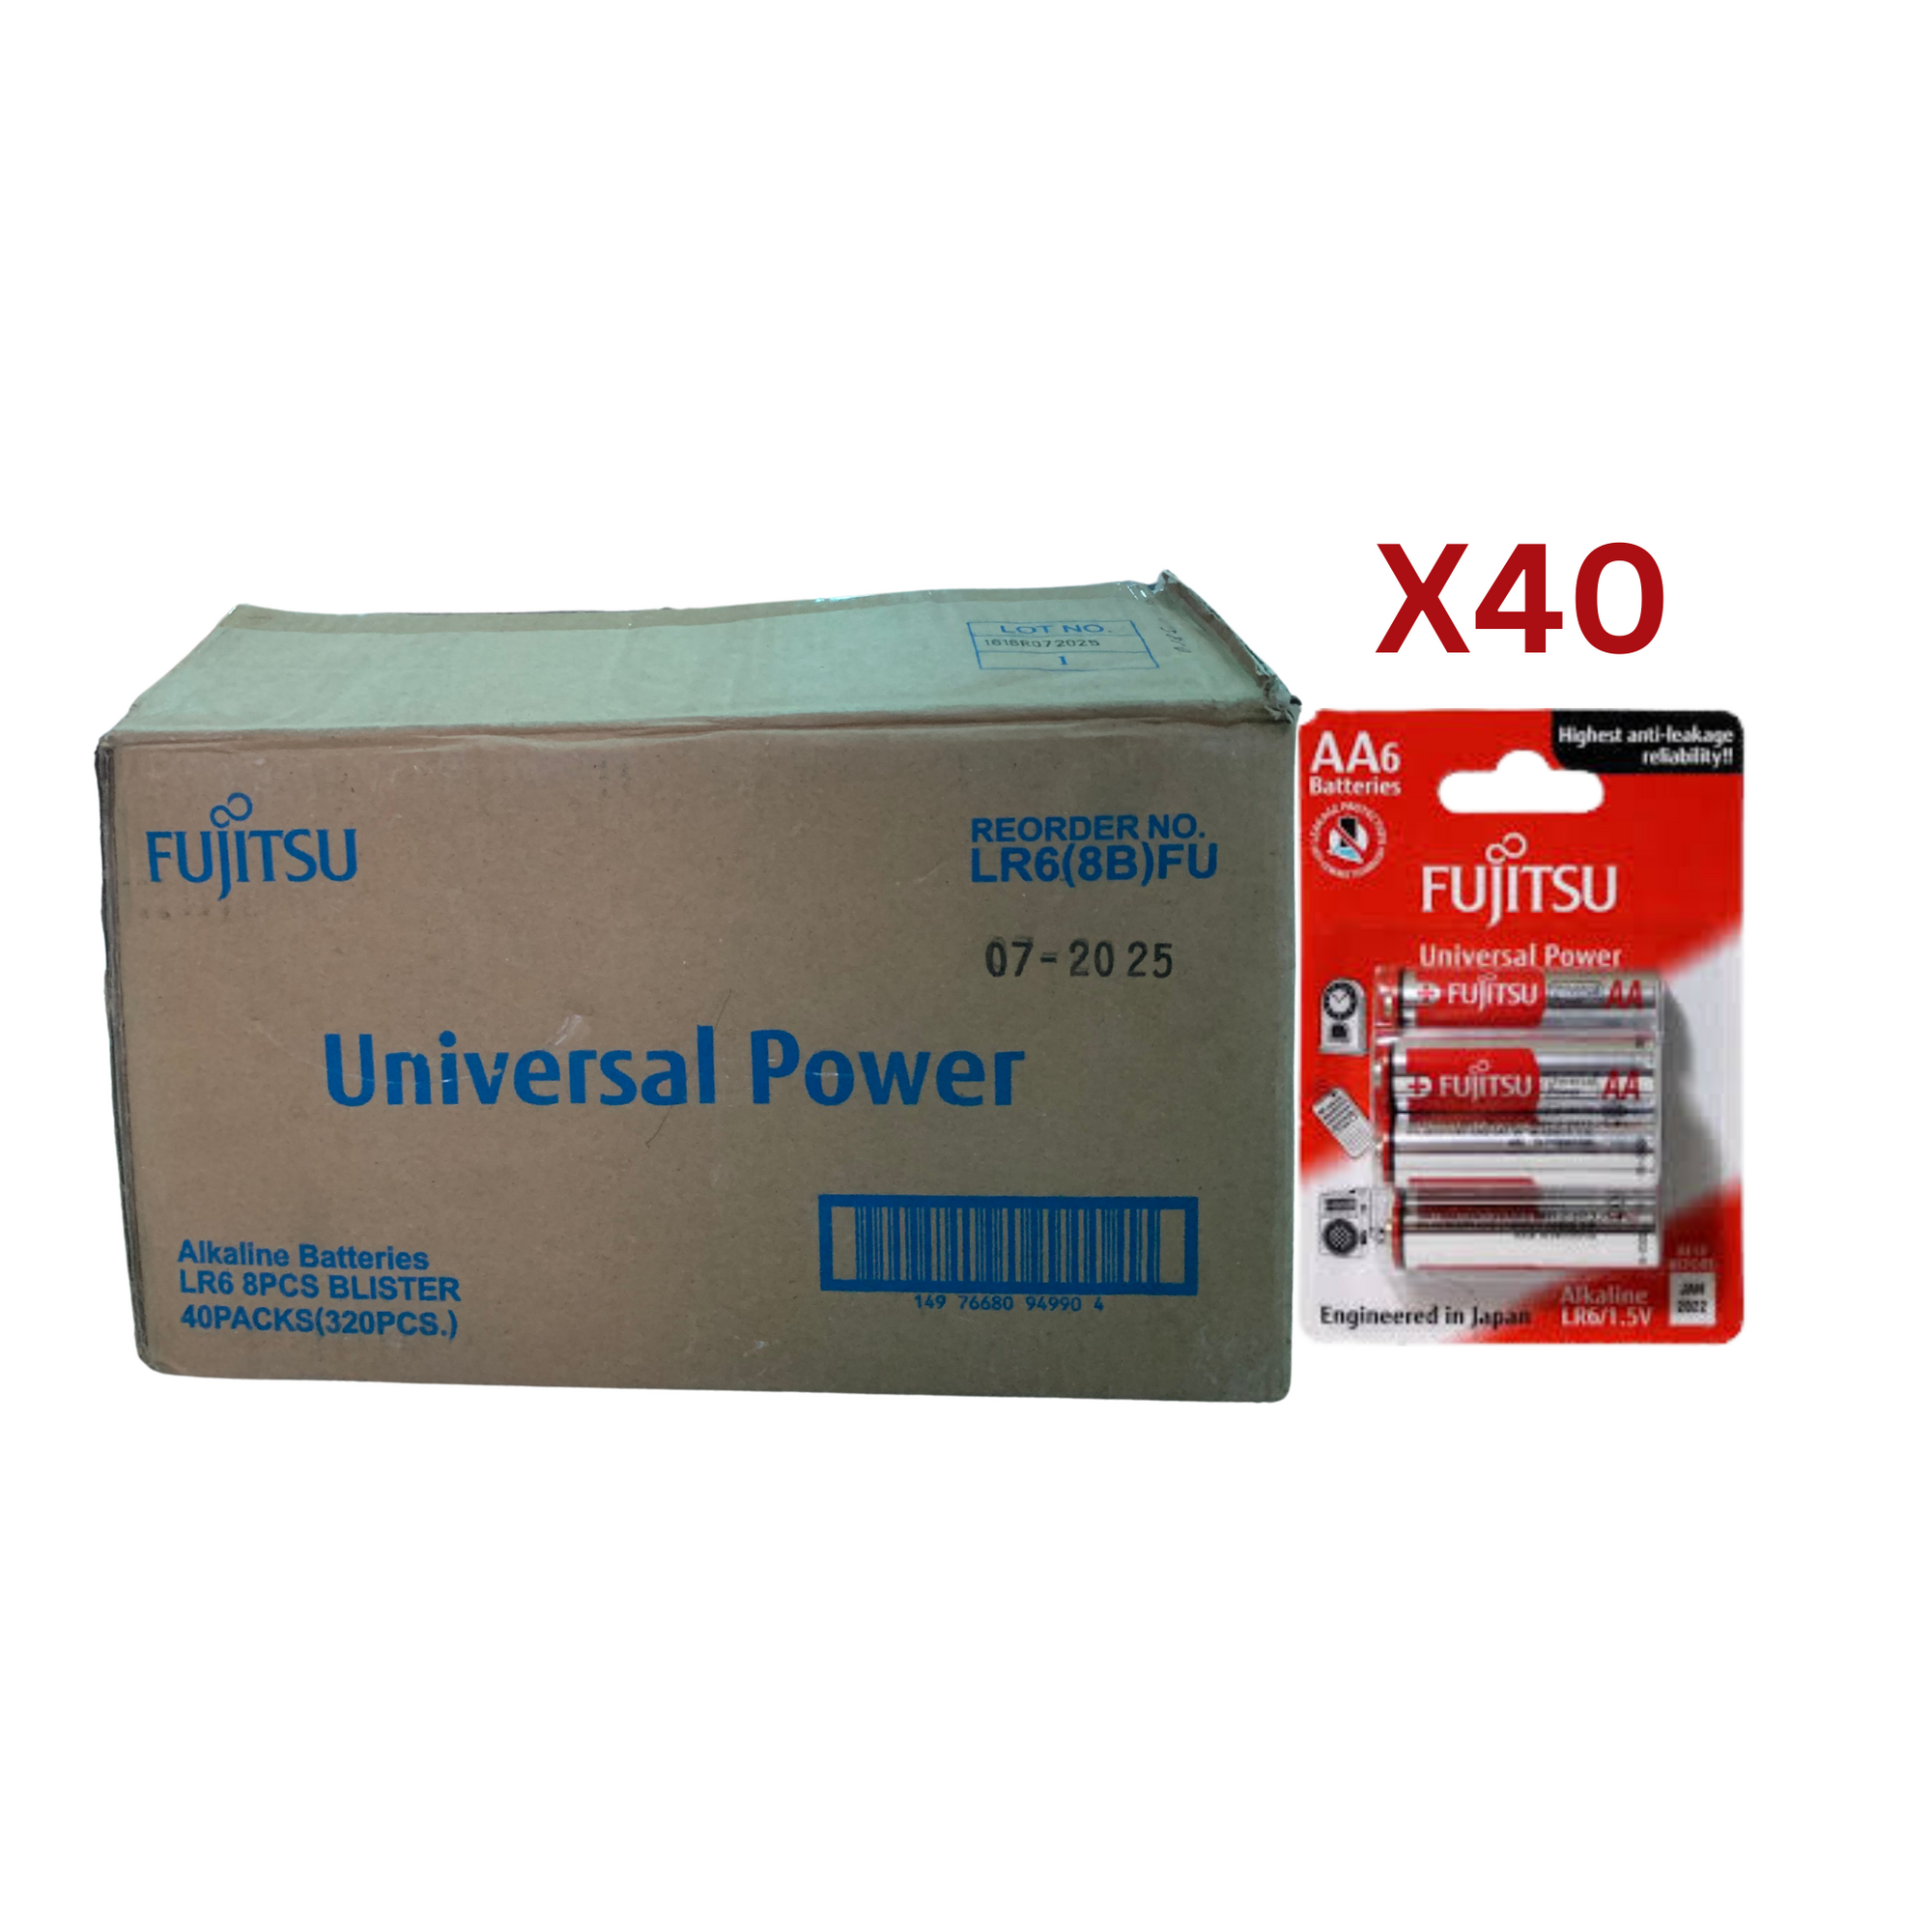 Fujitsu Alkaline Batteries AA6 LR6 1.5V 40 Packs - Wholesale